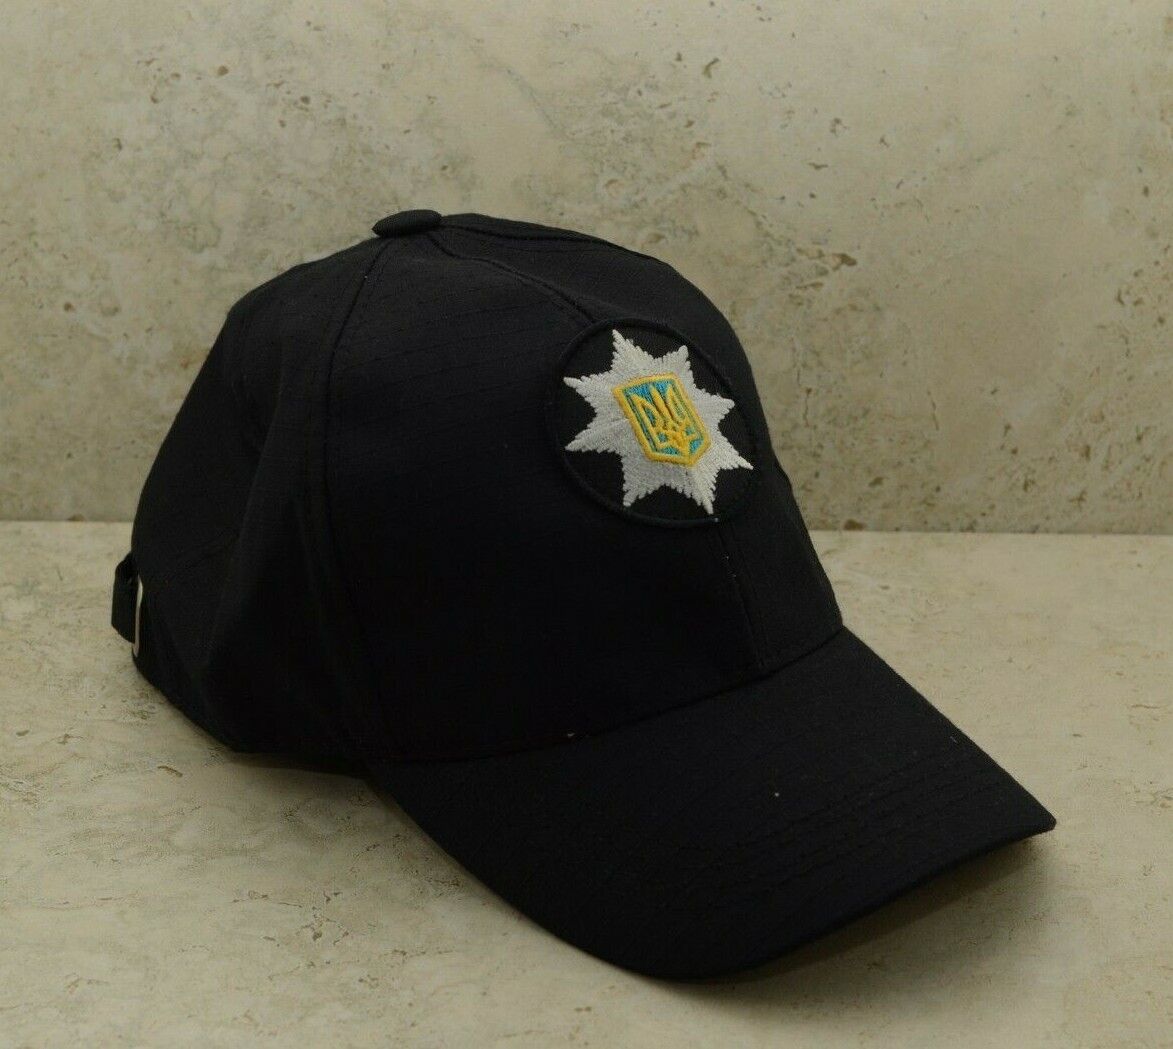 UKRAINE POLICE CAP HAT - OFFICER UNIFORM - ORIGINAL